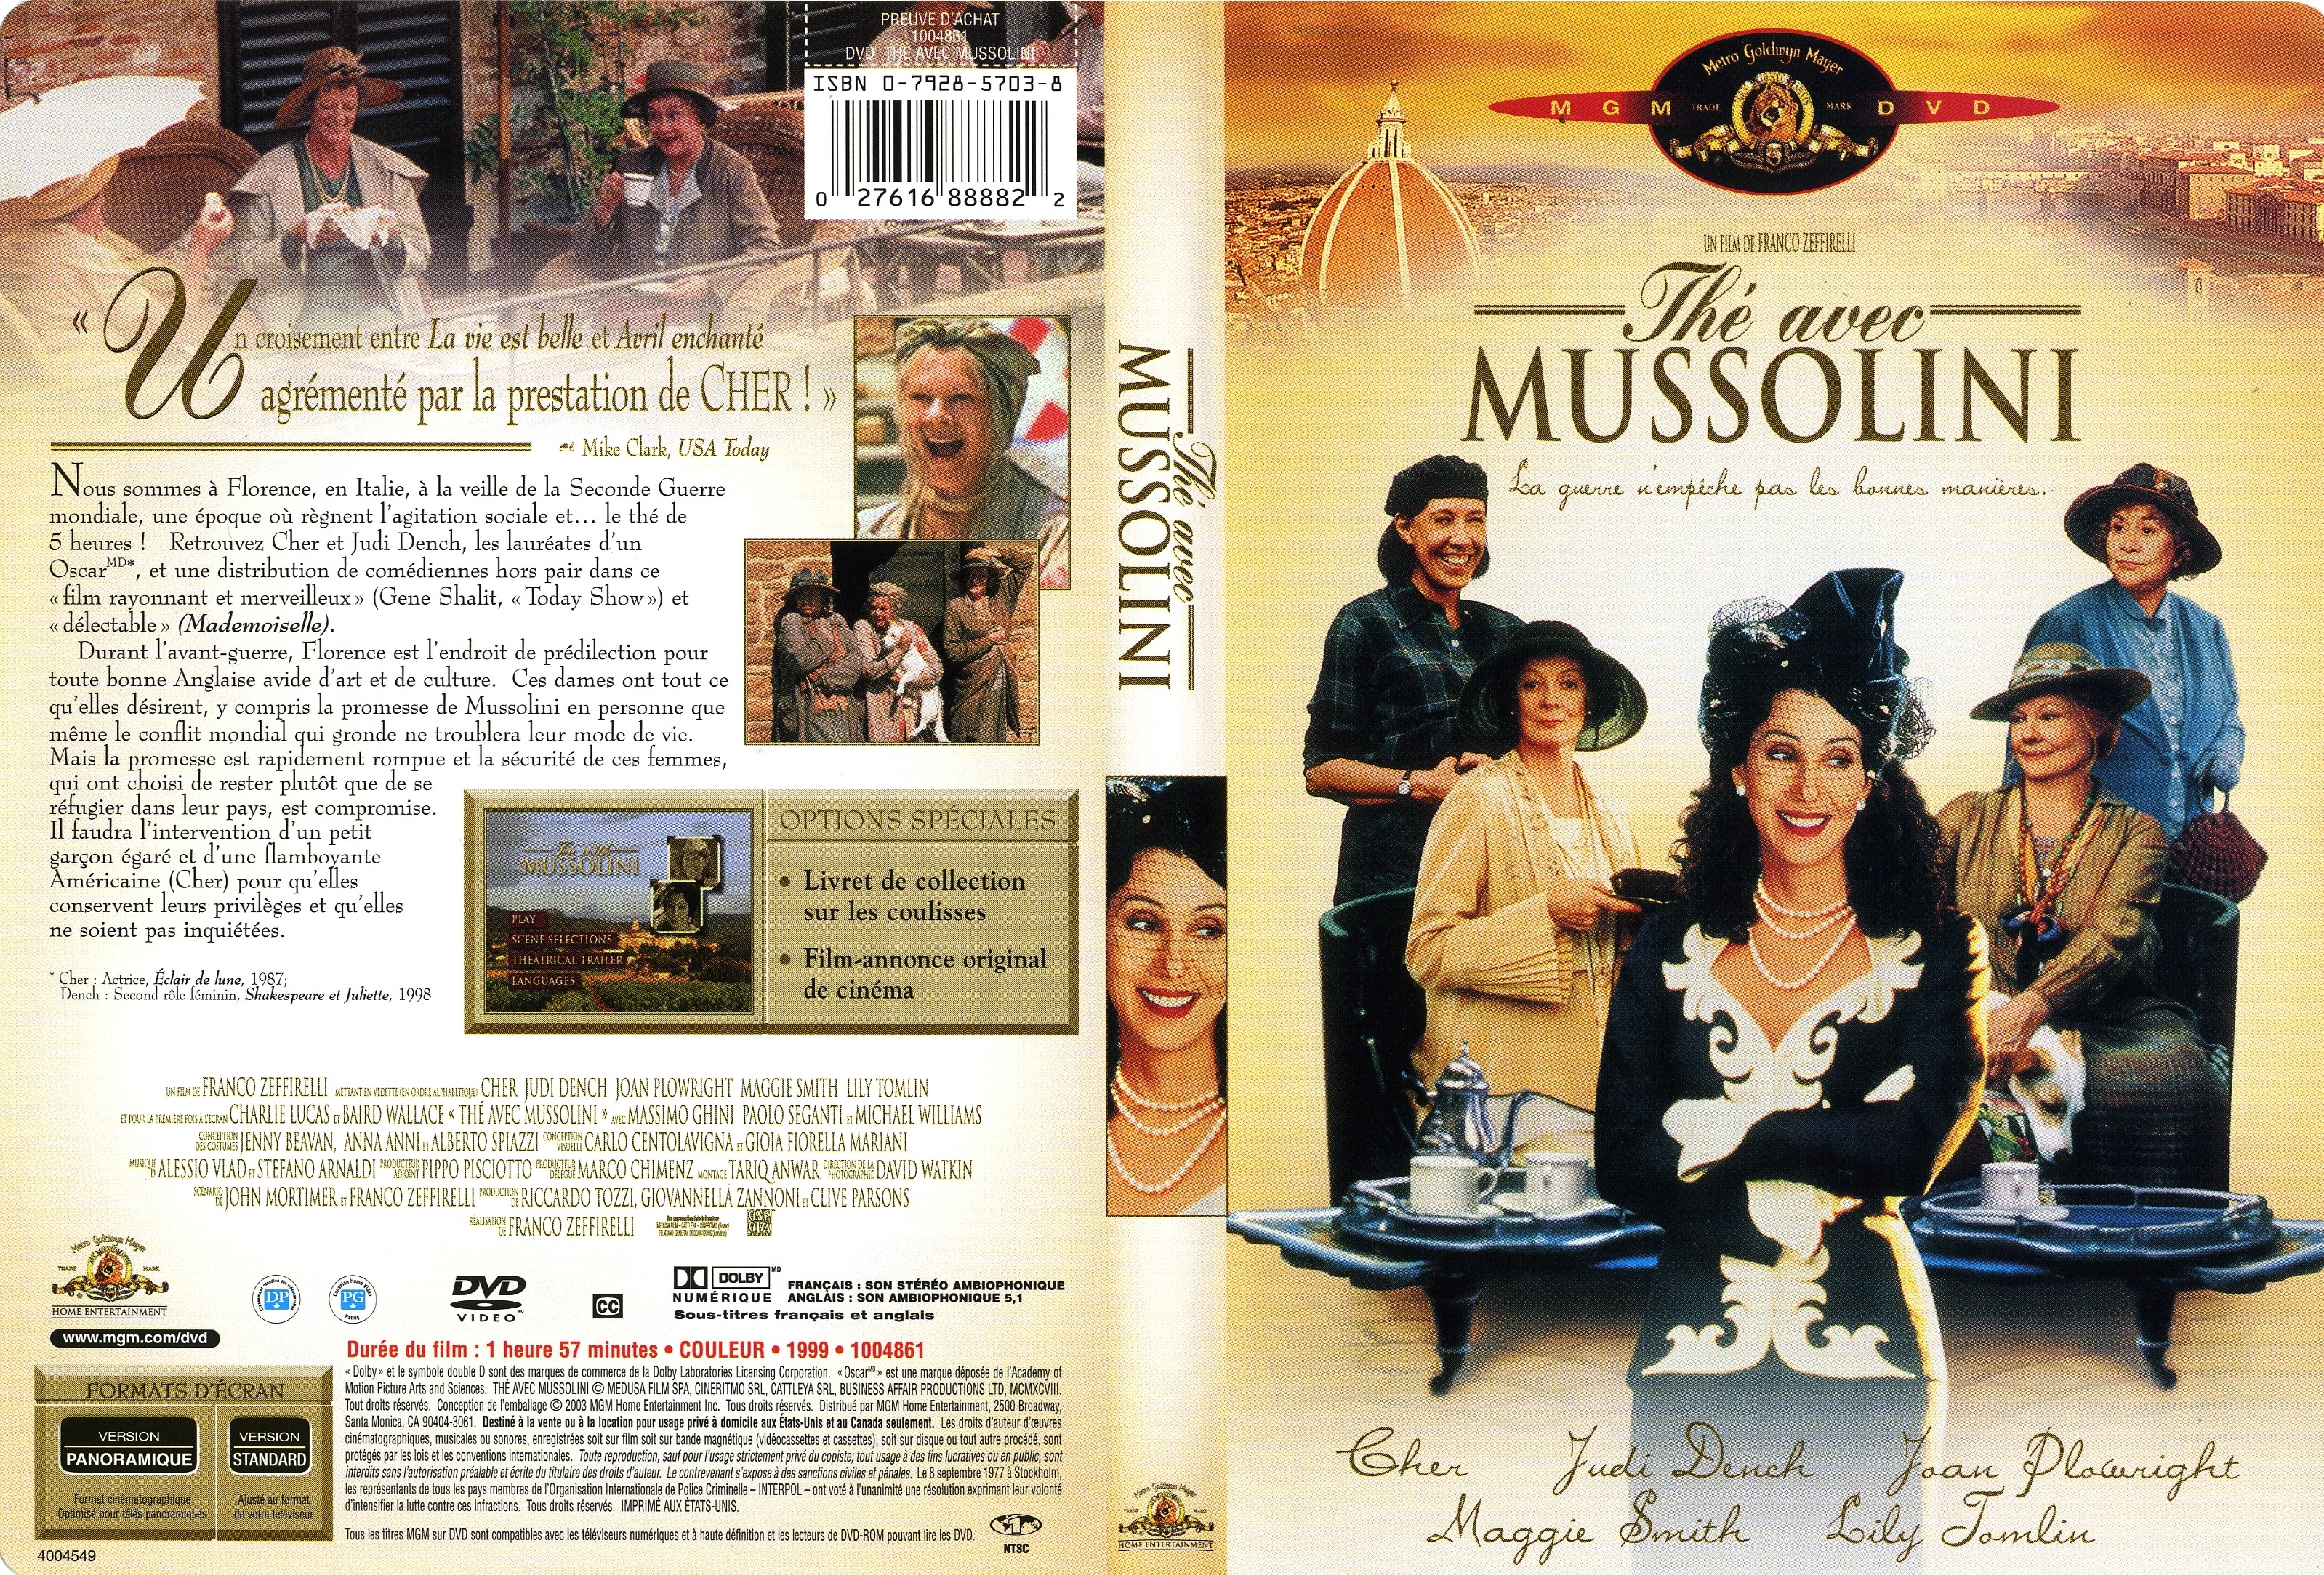 Jaquette DVD Th avec Mussolini